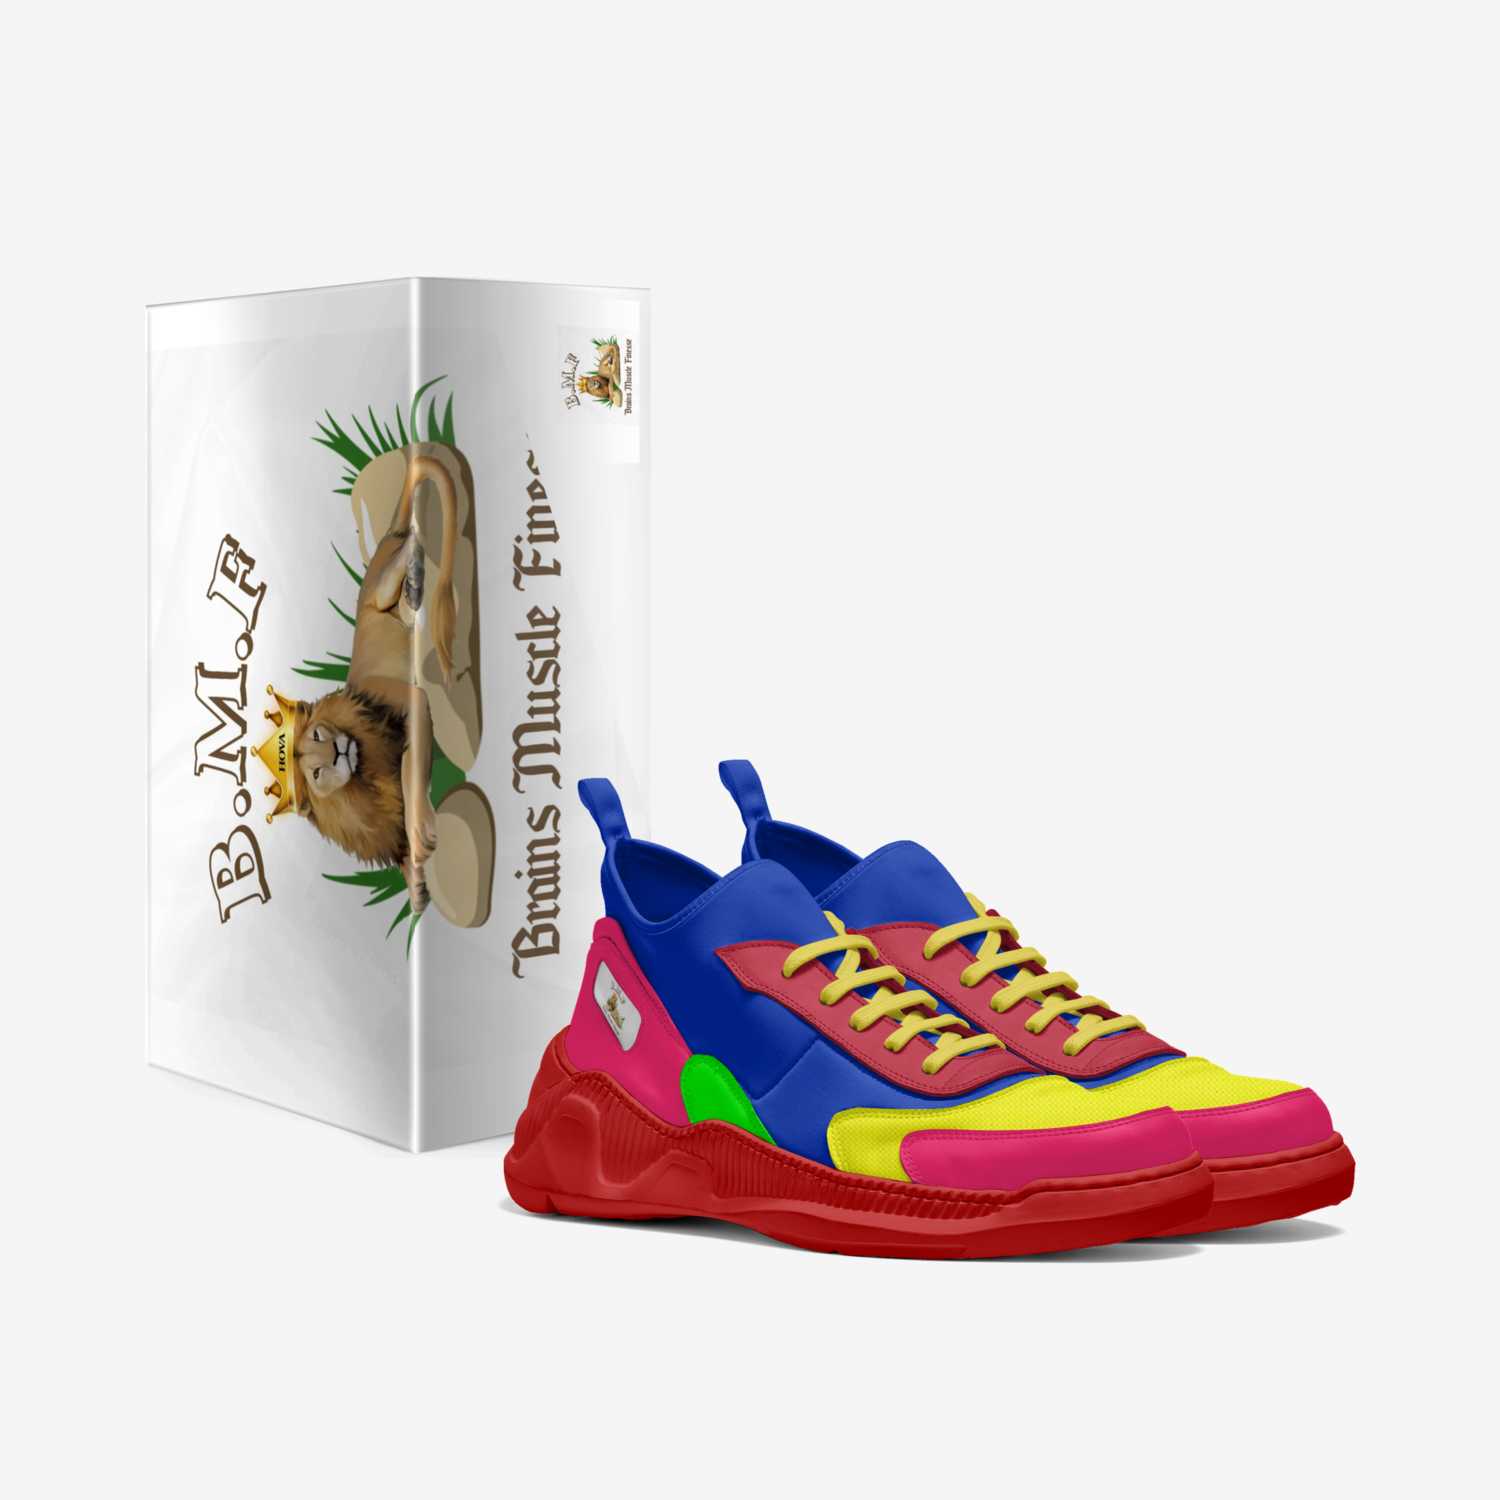 Hova4 custom made in Italy shoes by Jermaine Zeno | Box view